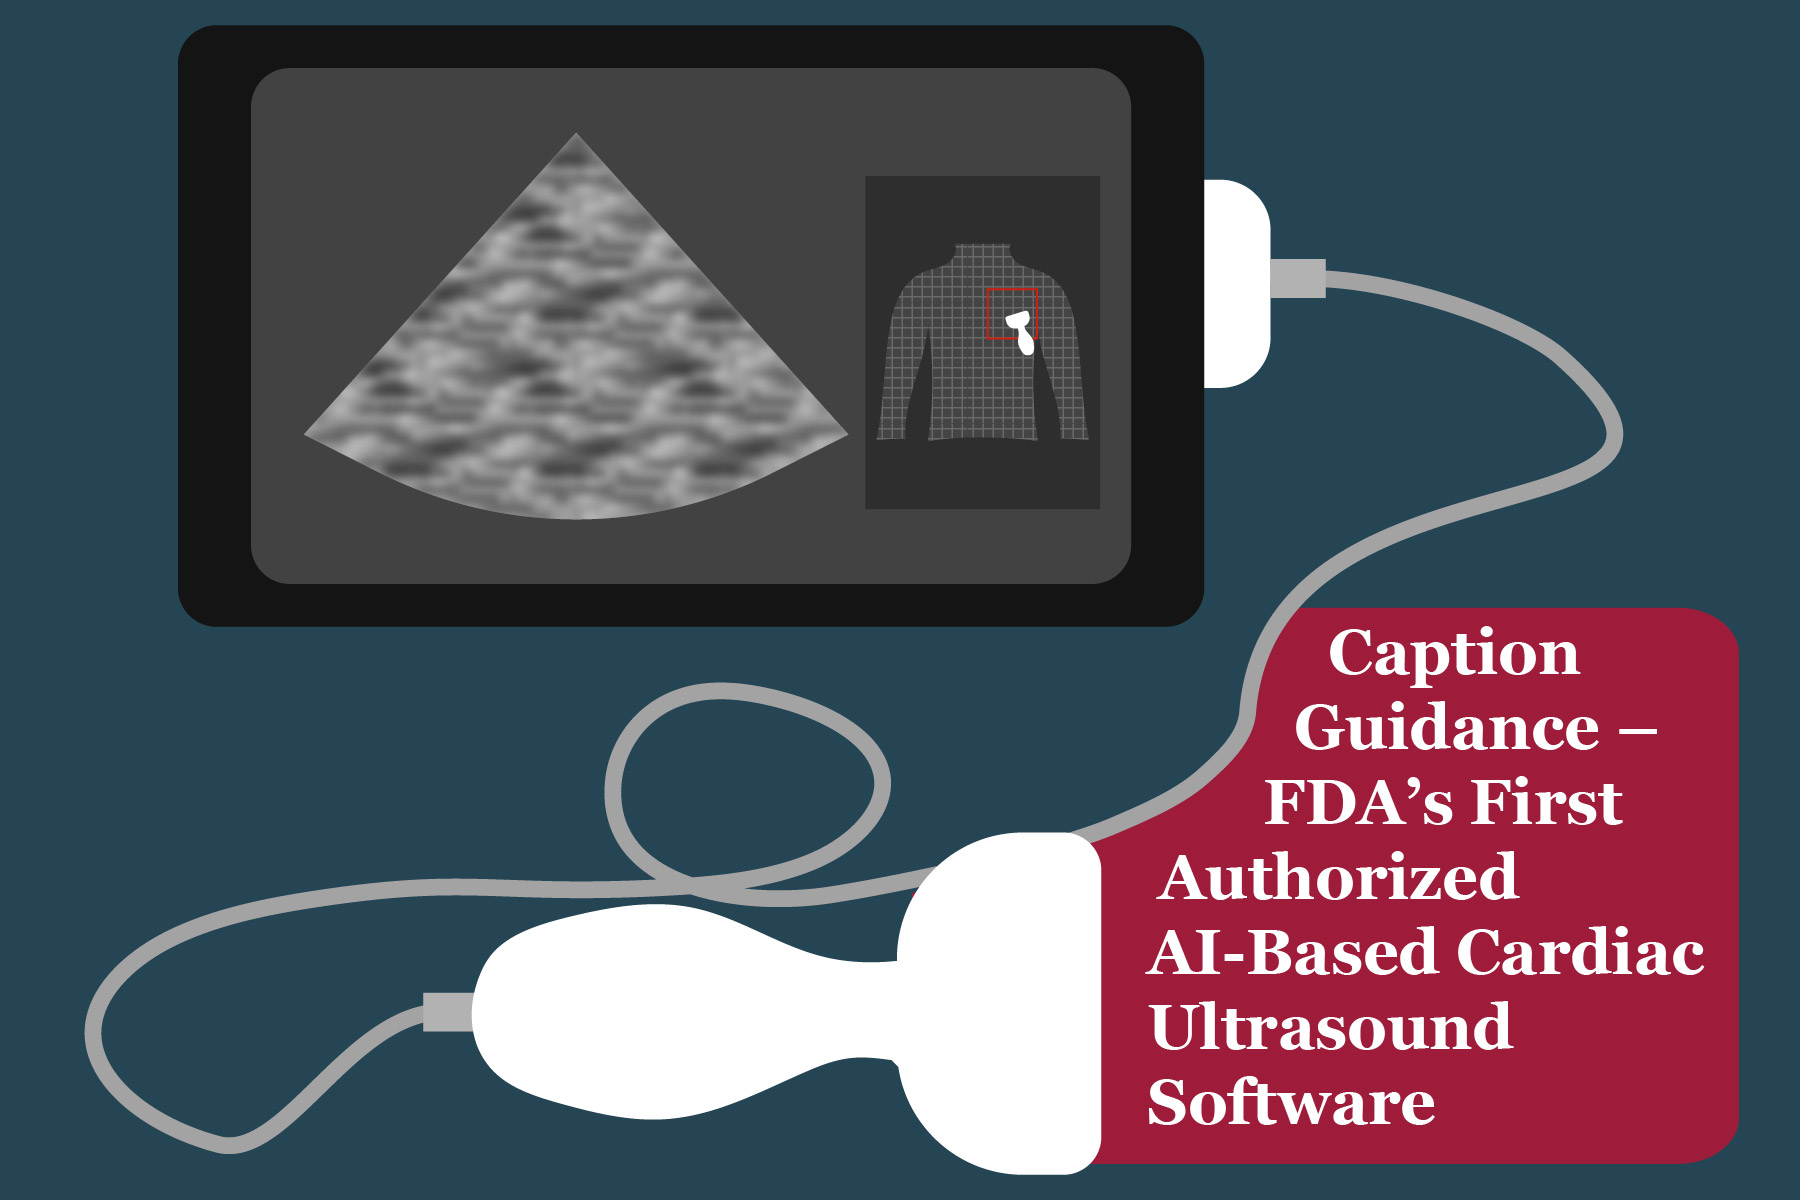 Caption Guidance – FDA’s First Authorized AI-Based Cardiac Ultrasound Software